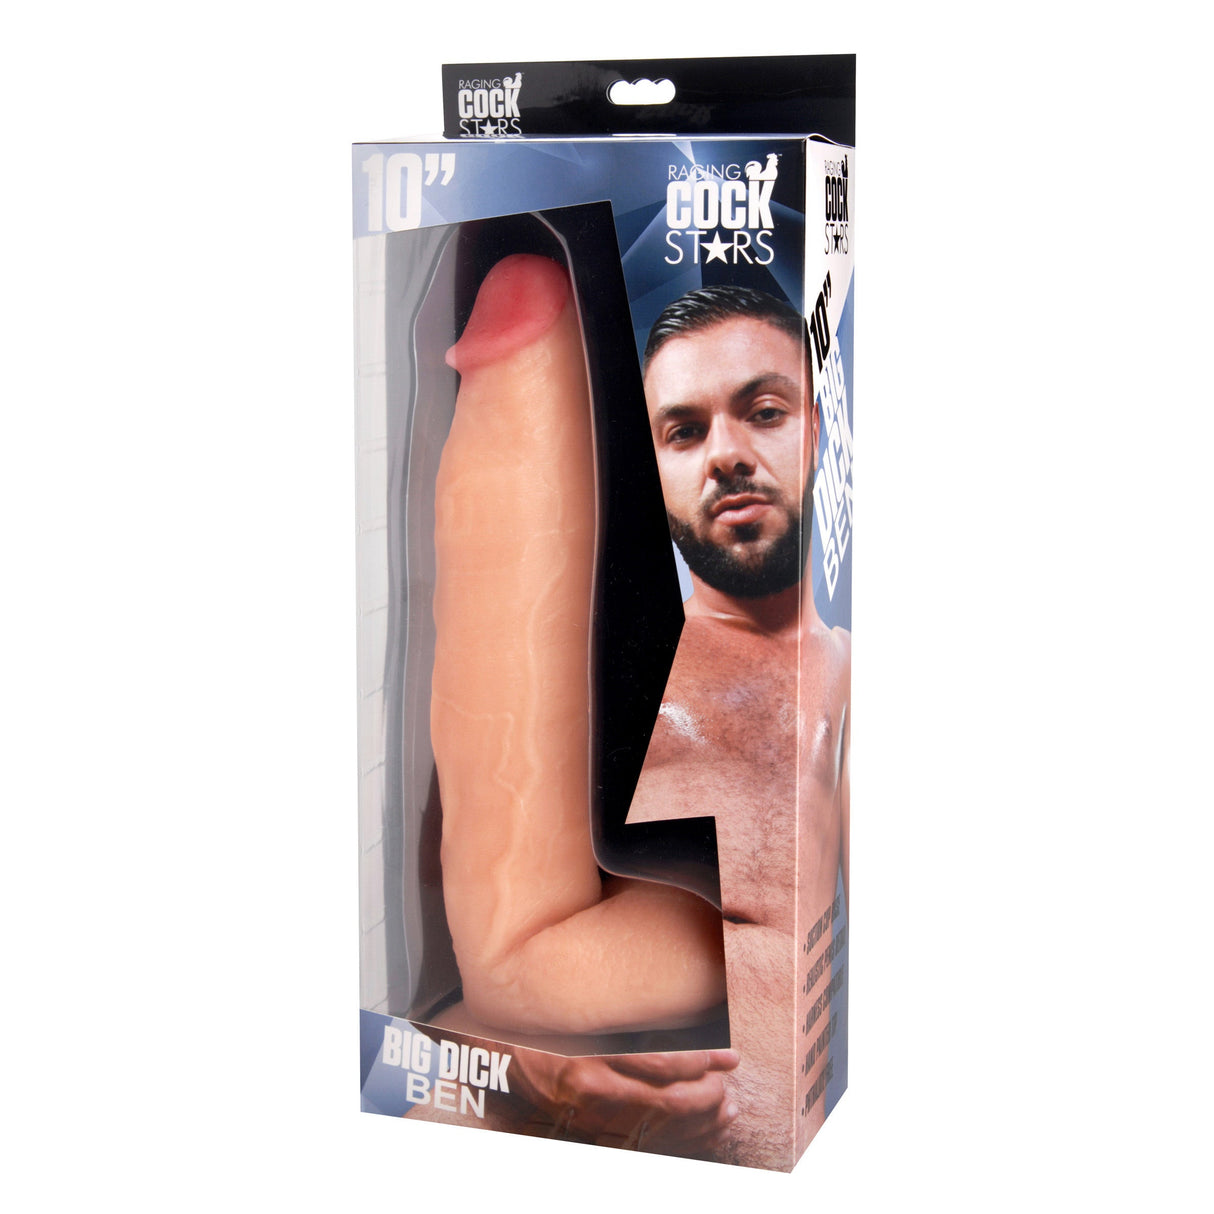 Big Dick Ben 10 Inch Realistic Dildo